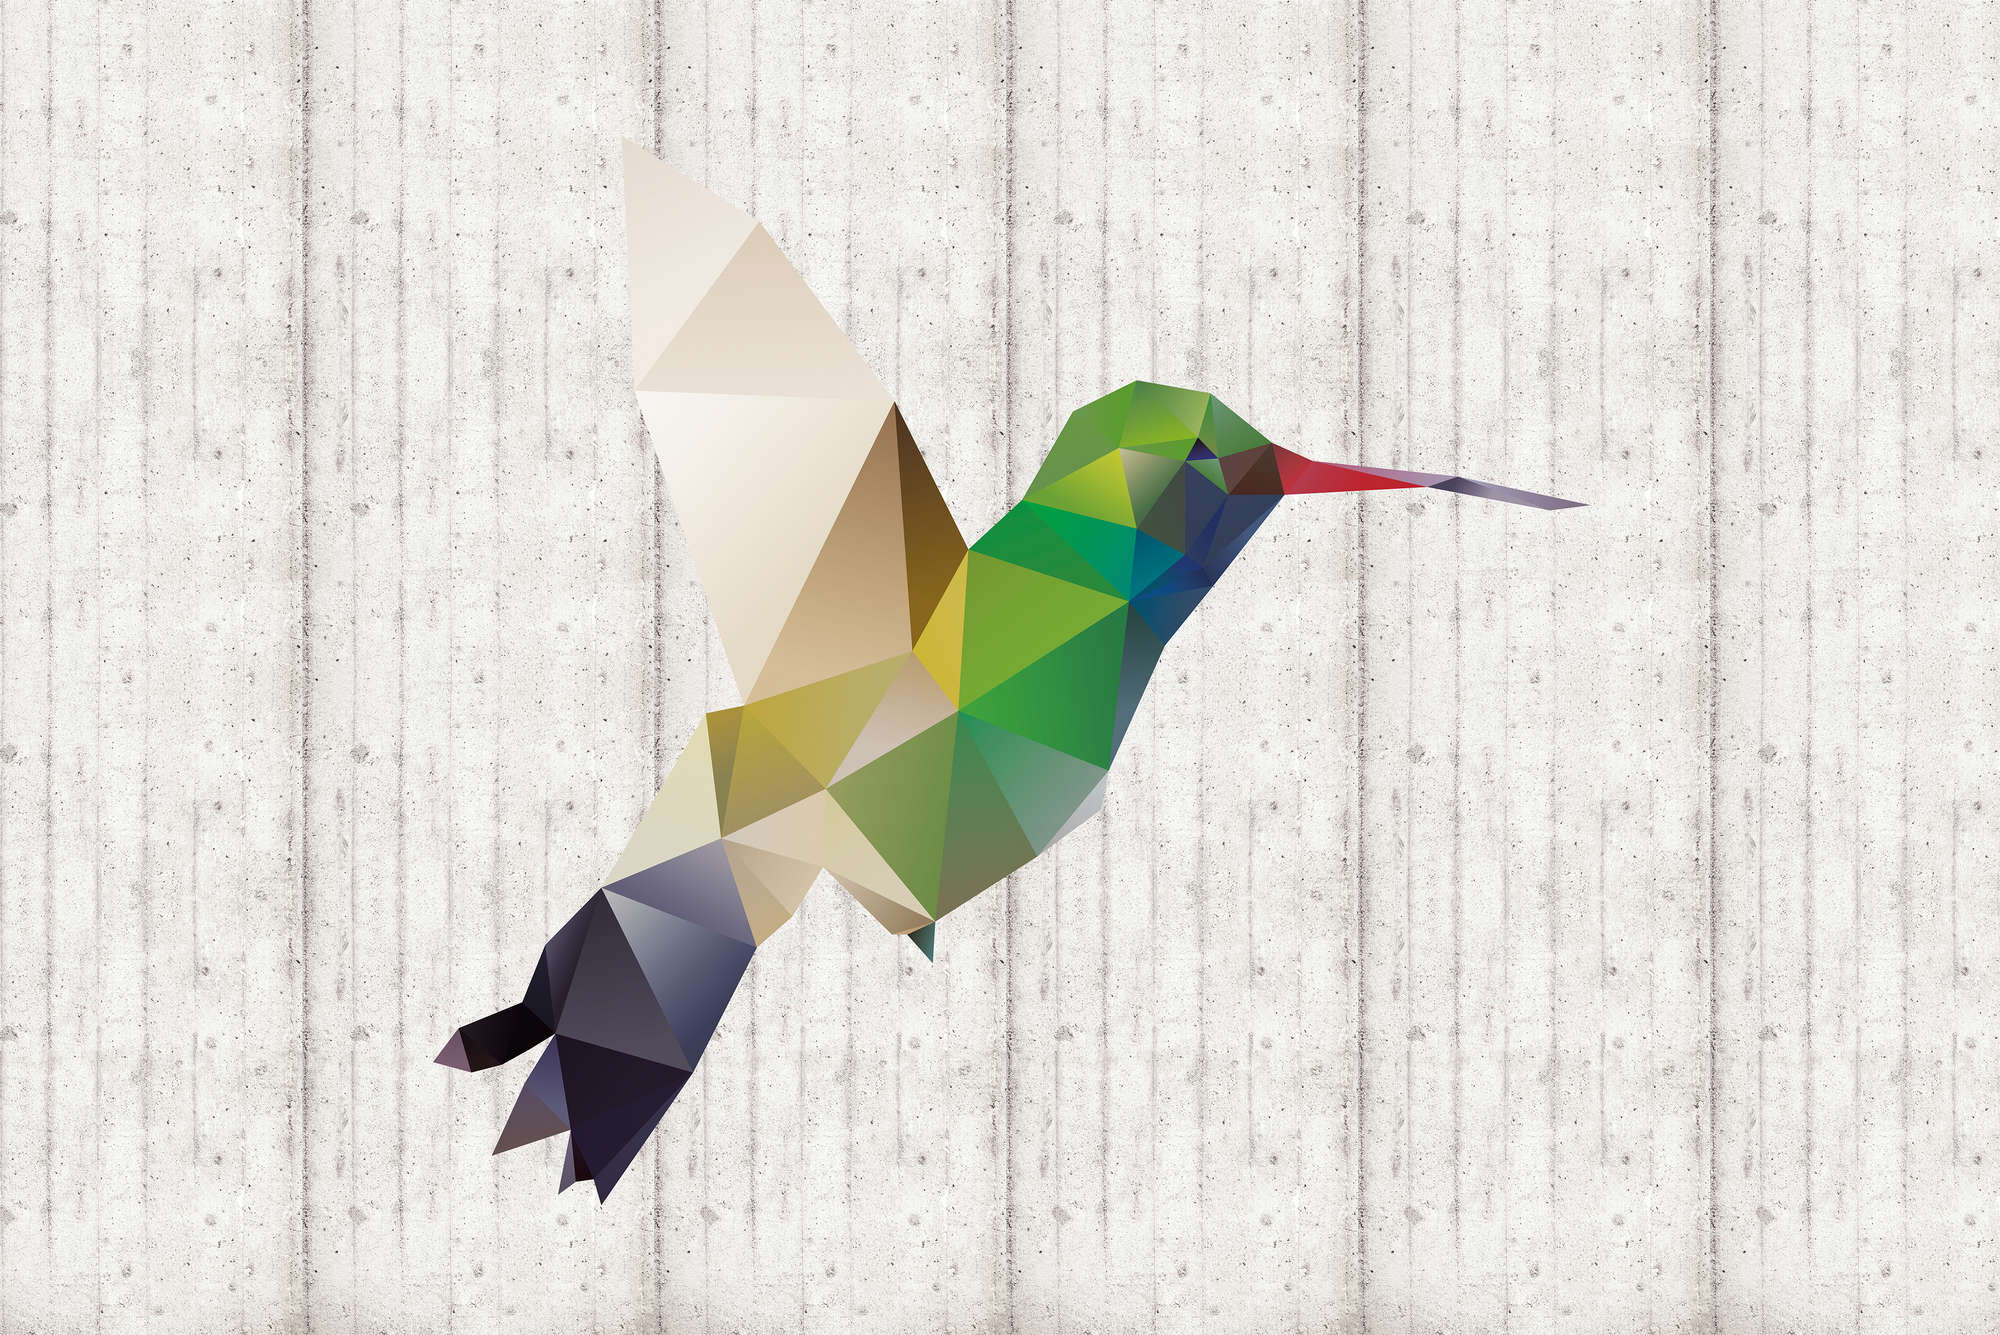             Graphic mural hummingbird motif on textured nonwoven
        